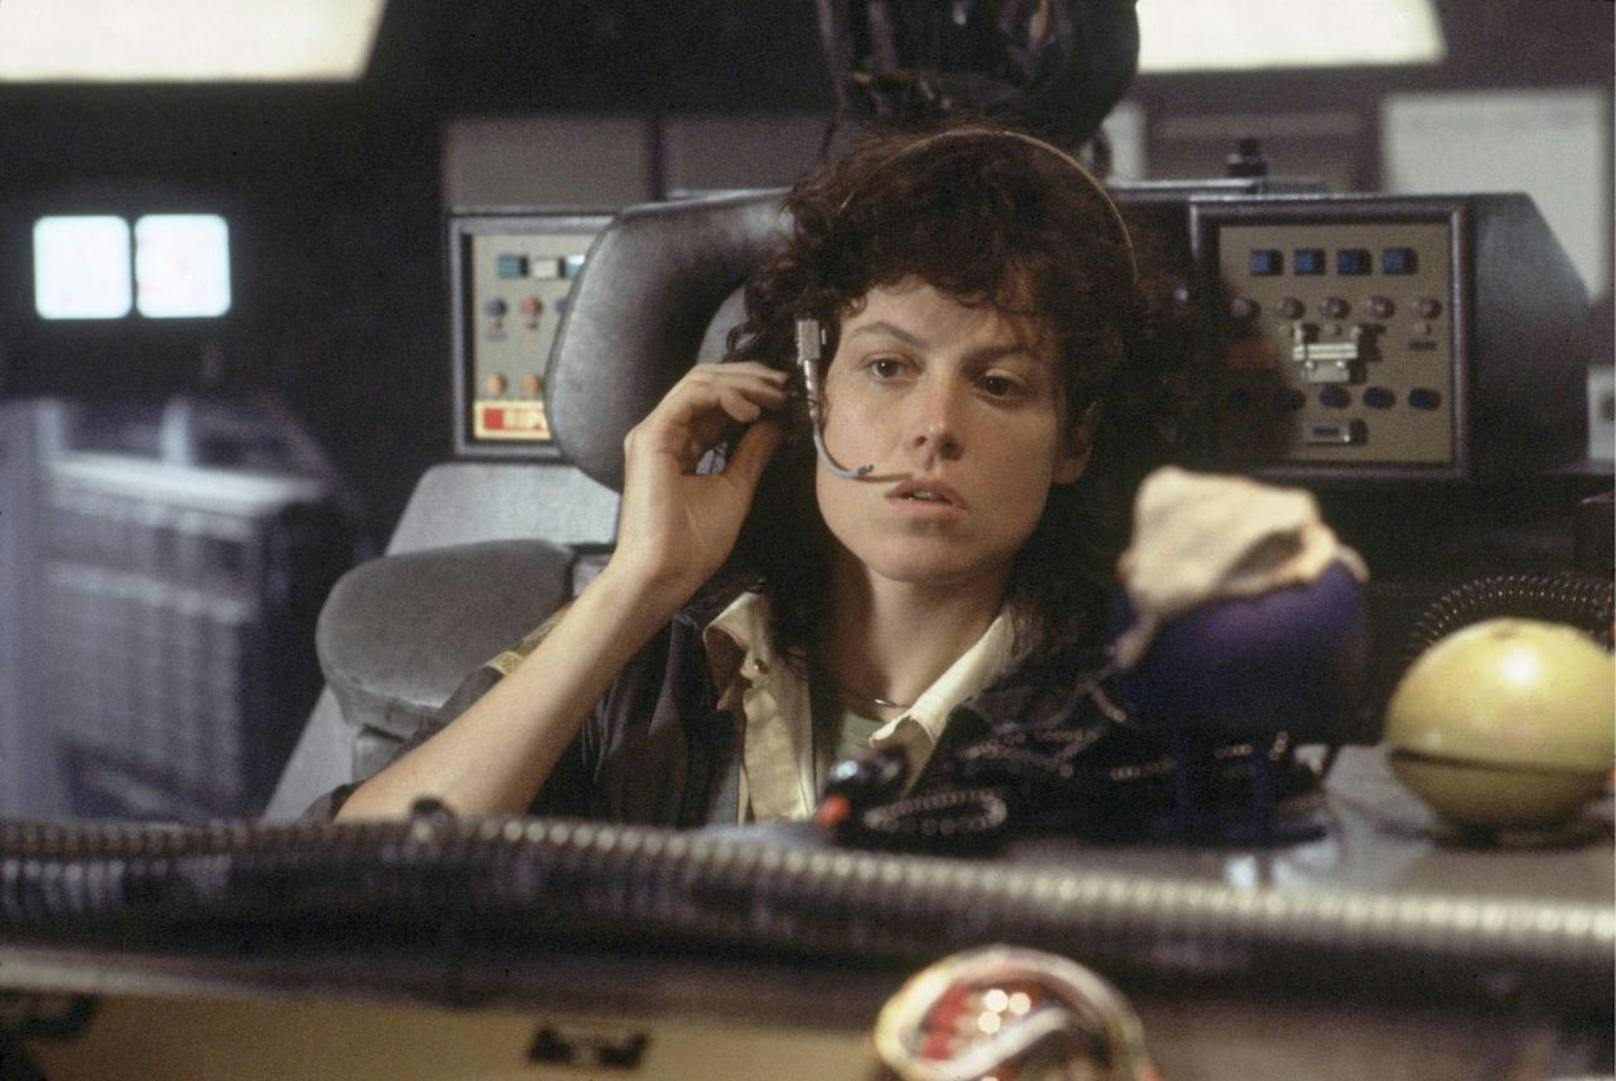 Sigourney Weaver in "Alien" (1979)